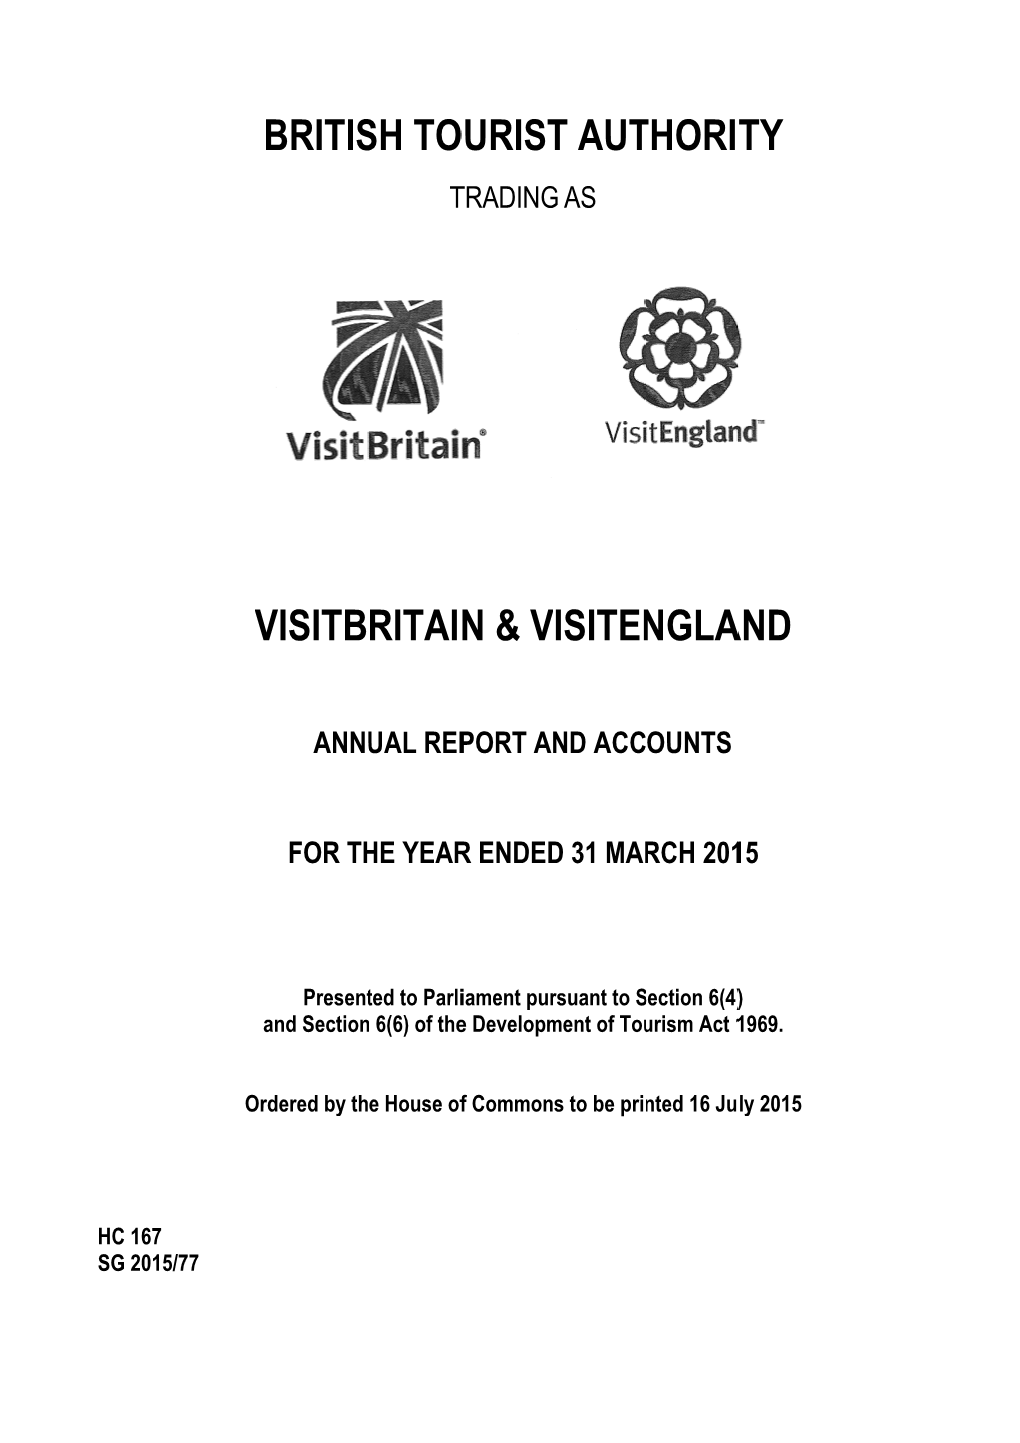 BTA Annual Report & Accounts 2014-15